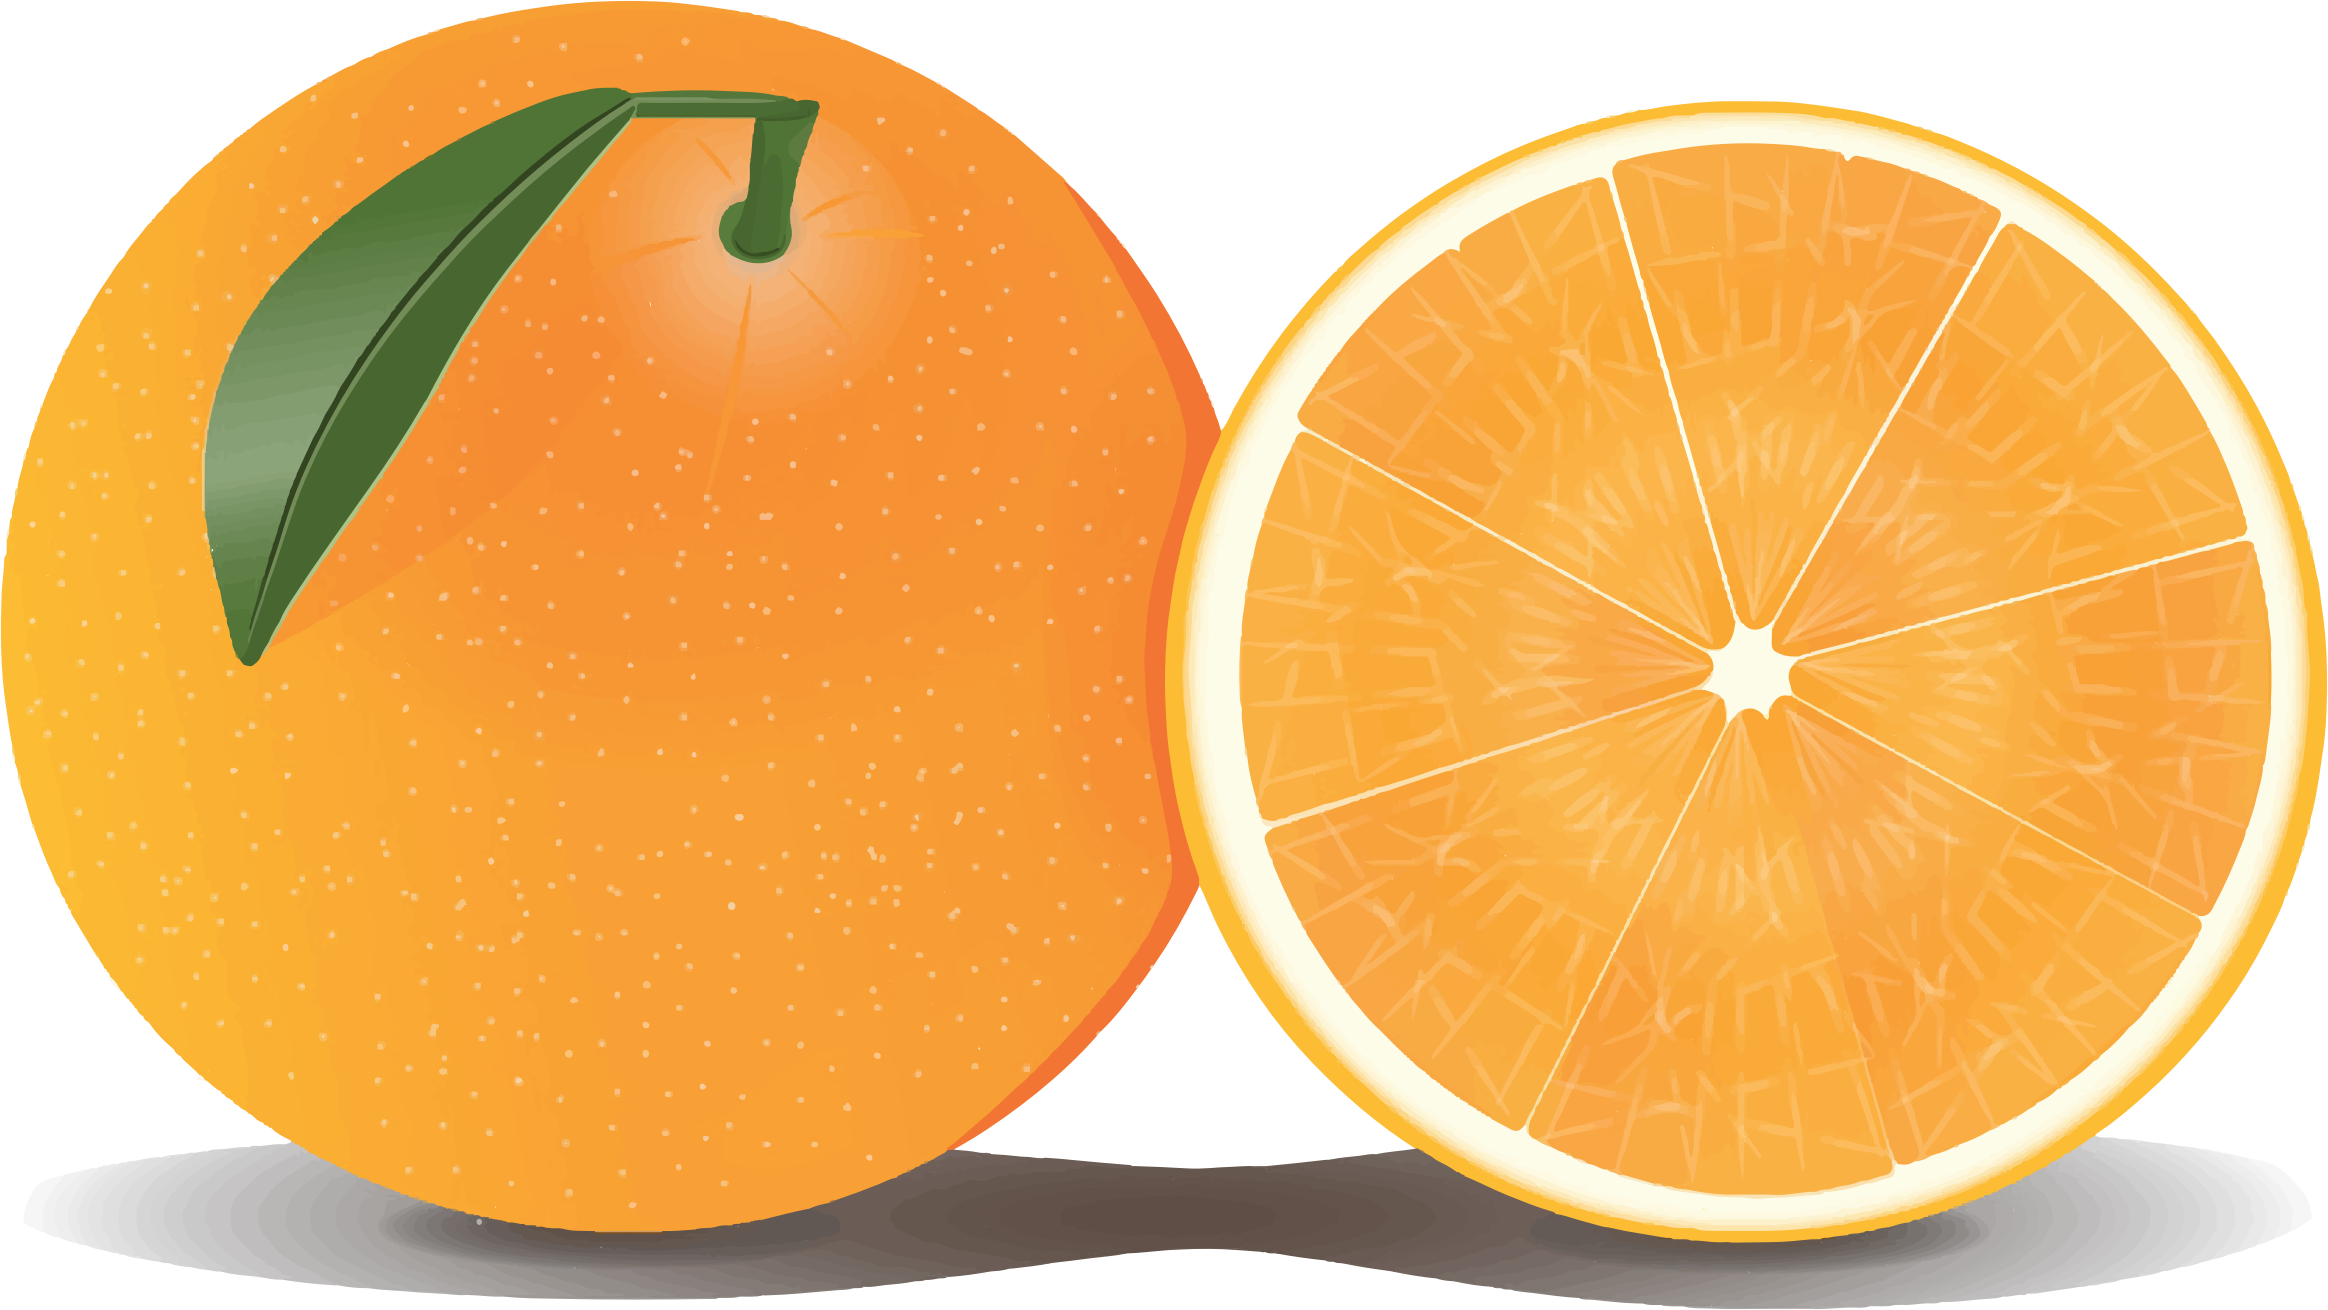 Two oranges. Апельсин. Апельсин на прозрачном фоне. Апельсин иллюстрация. Апельсин рисунок.